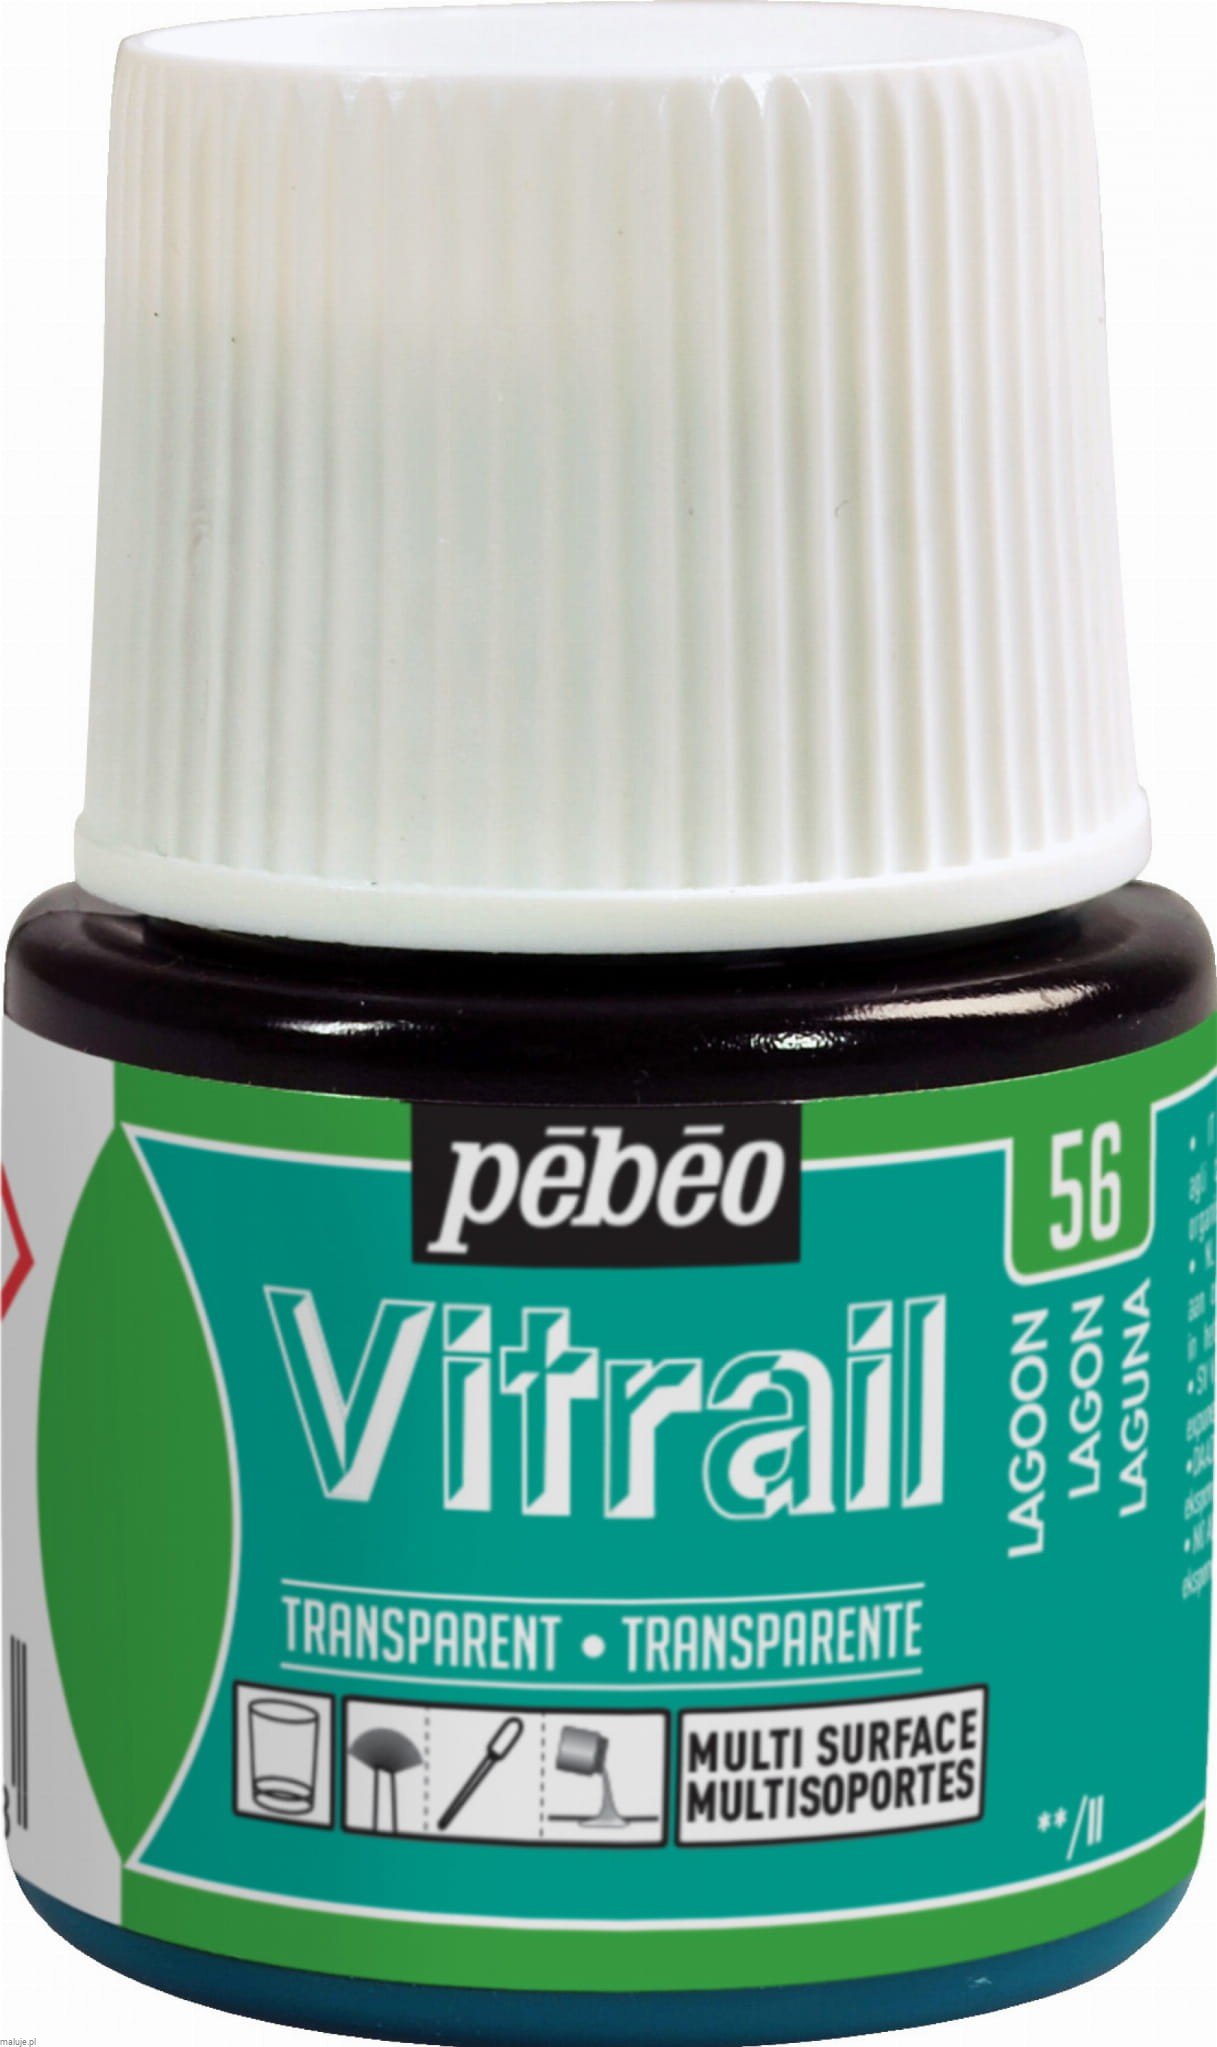 Vitrail Transparent 56 VIVID LAGON - farba witrażowa